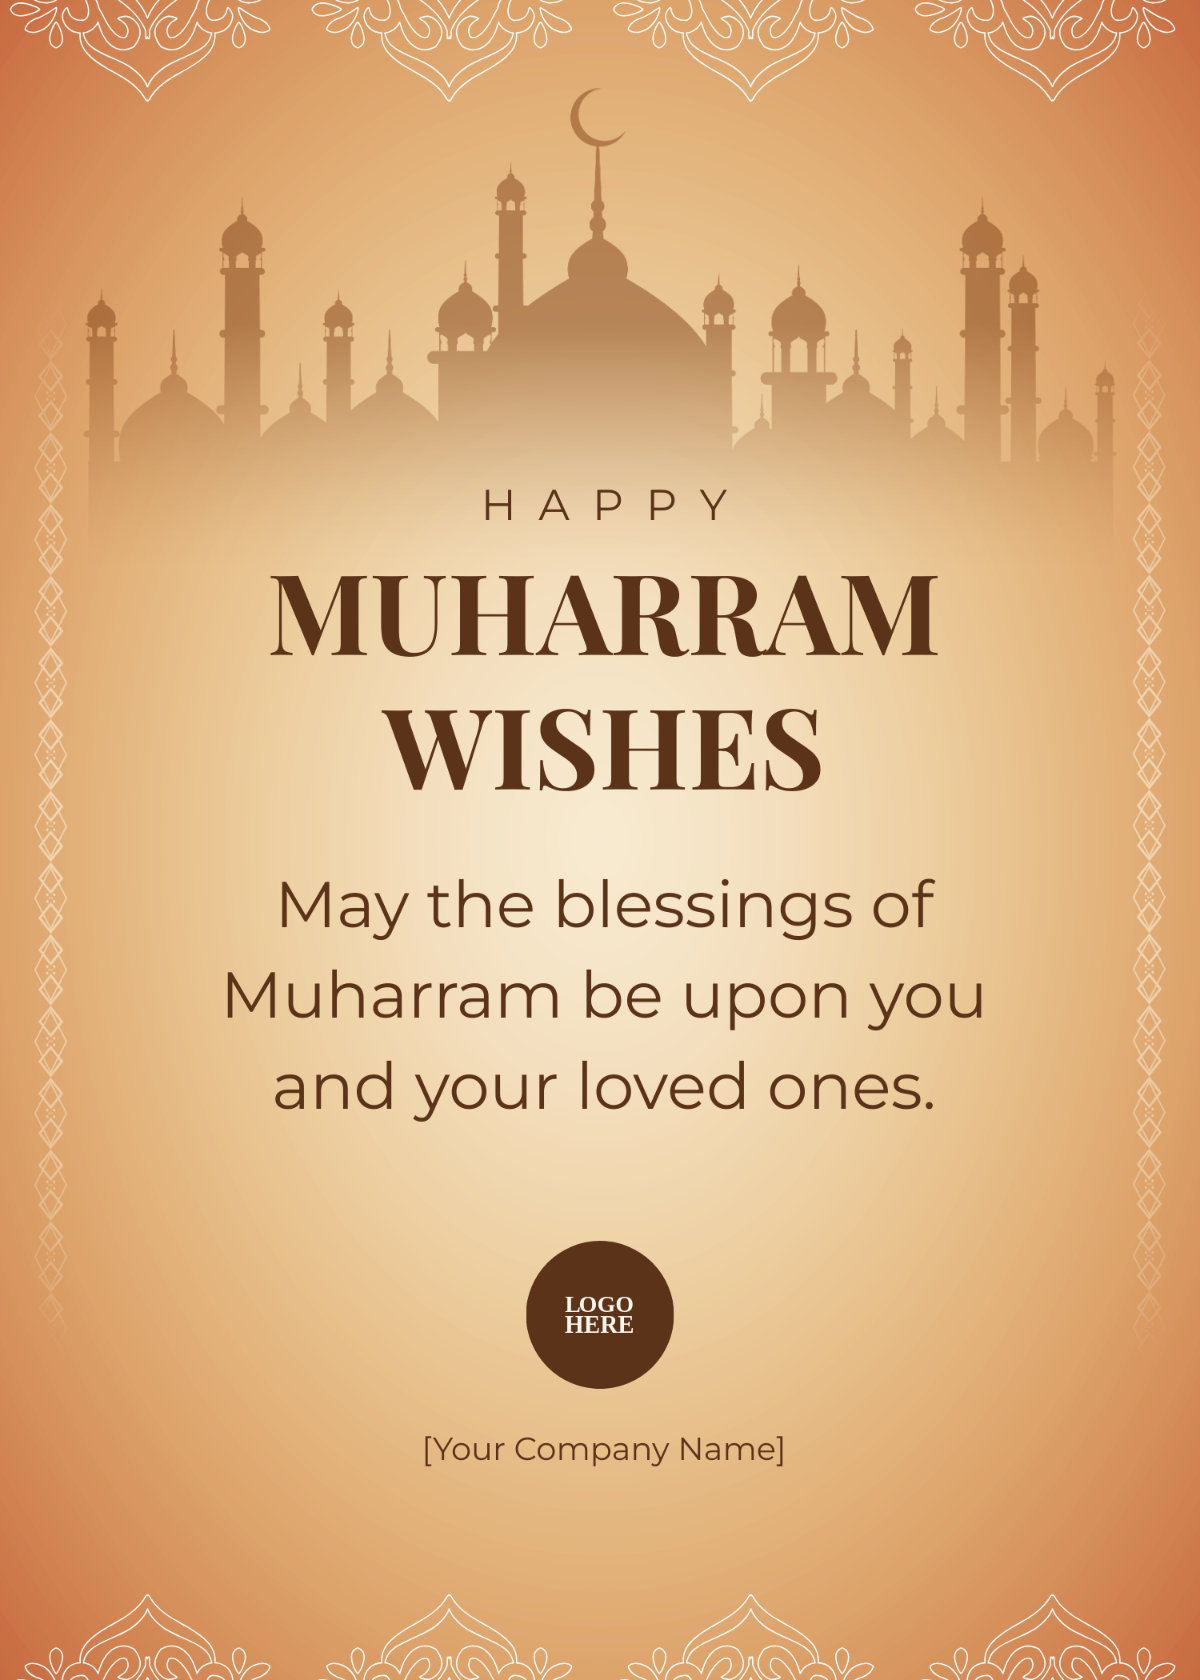 Muharram Festival Wishes